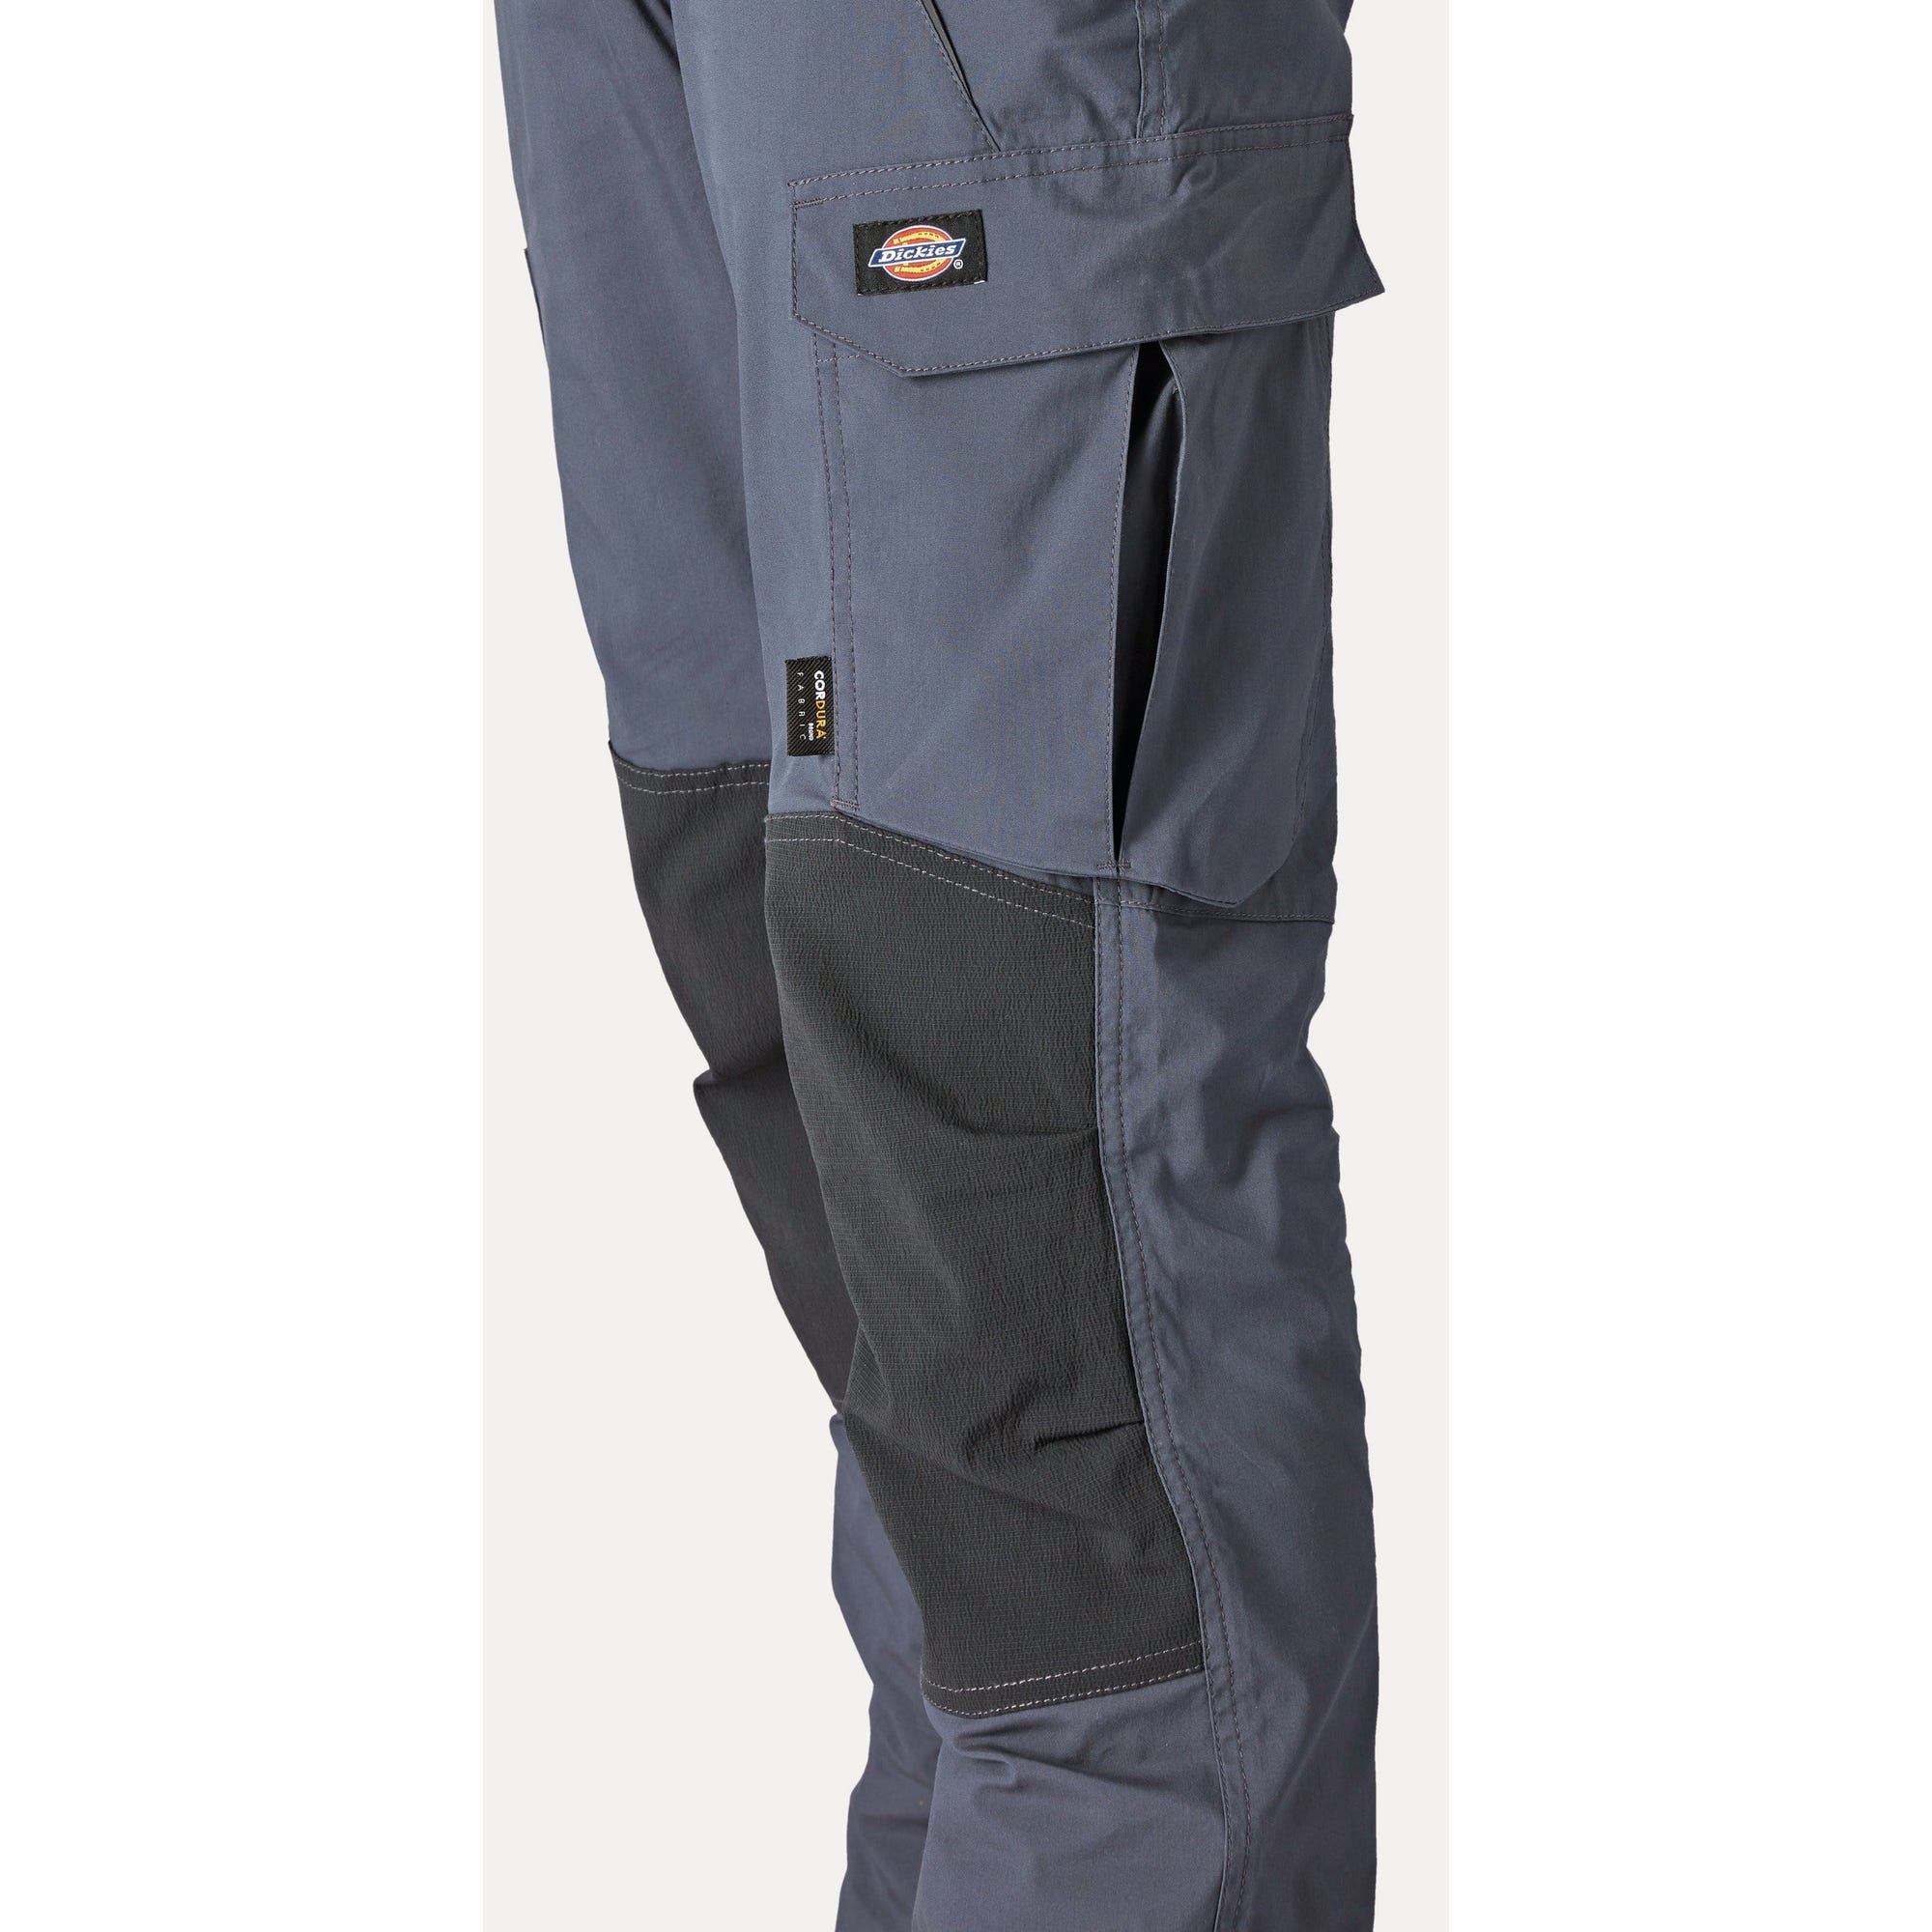 Pantalon léger Flex Noir - Dickies - Taille 44 8